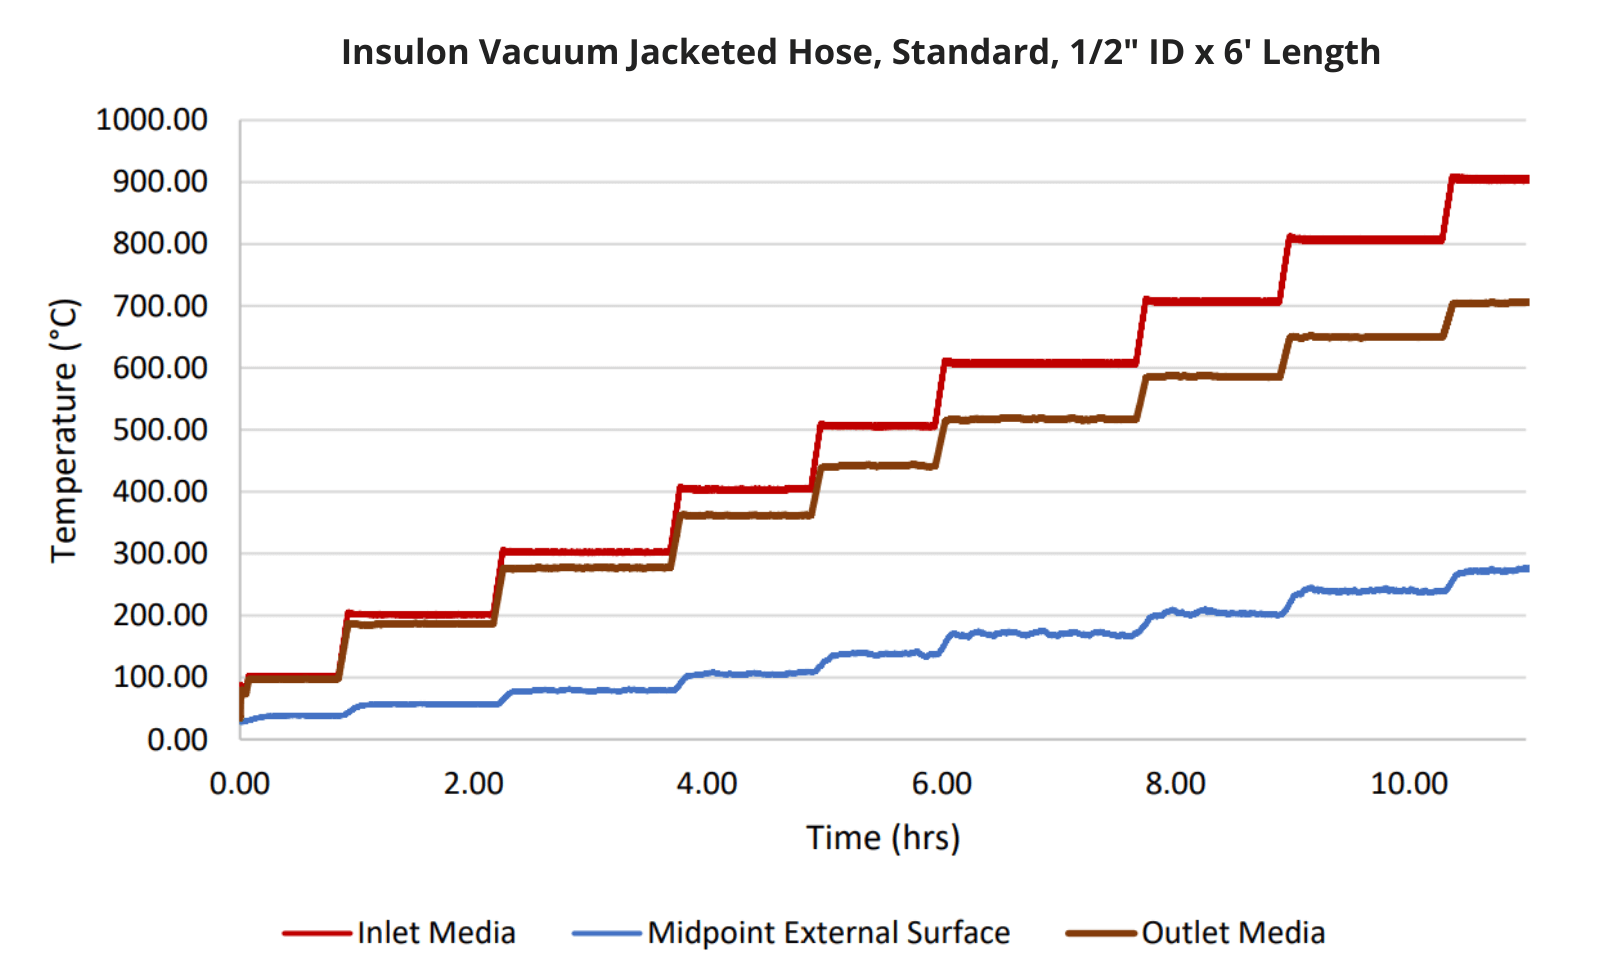 Insulon Vacuum Jacketed Hose, Standard, High Temperature